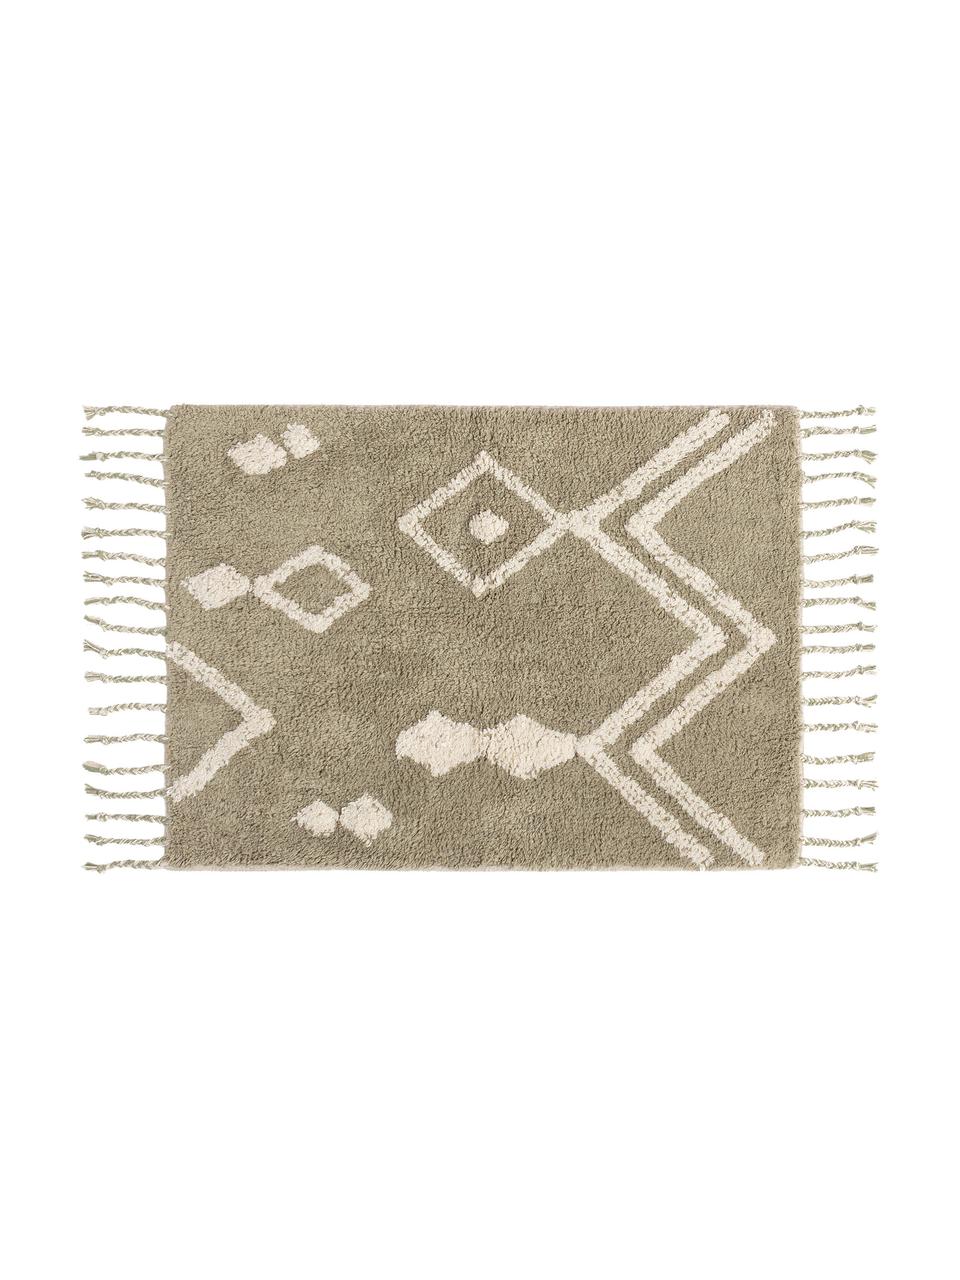 Badmat Fauve met boho patroon en kwastjes in beige/wit, 100% katoen, Beige, wit, 50 x 70 cm